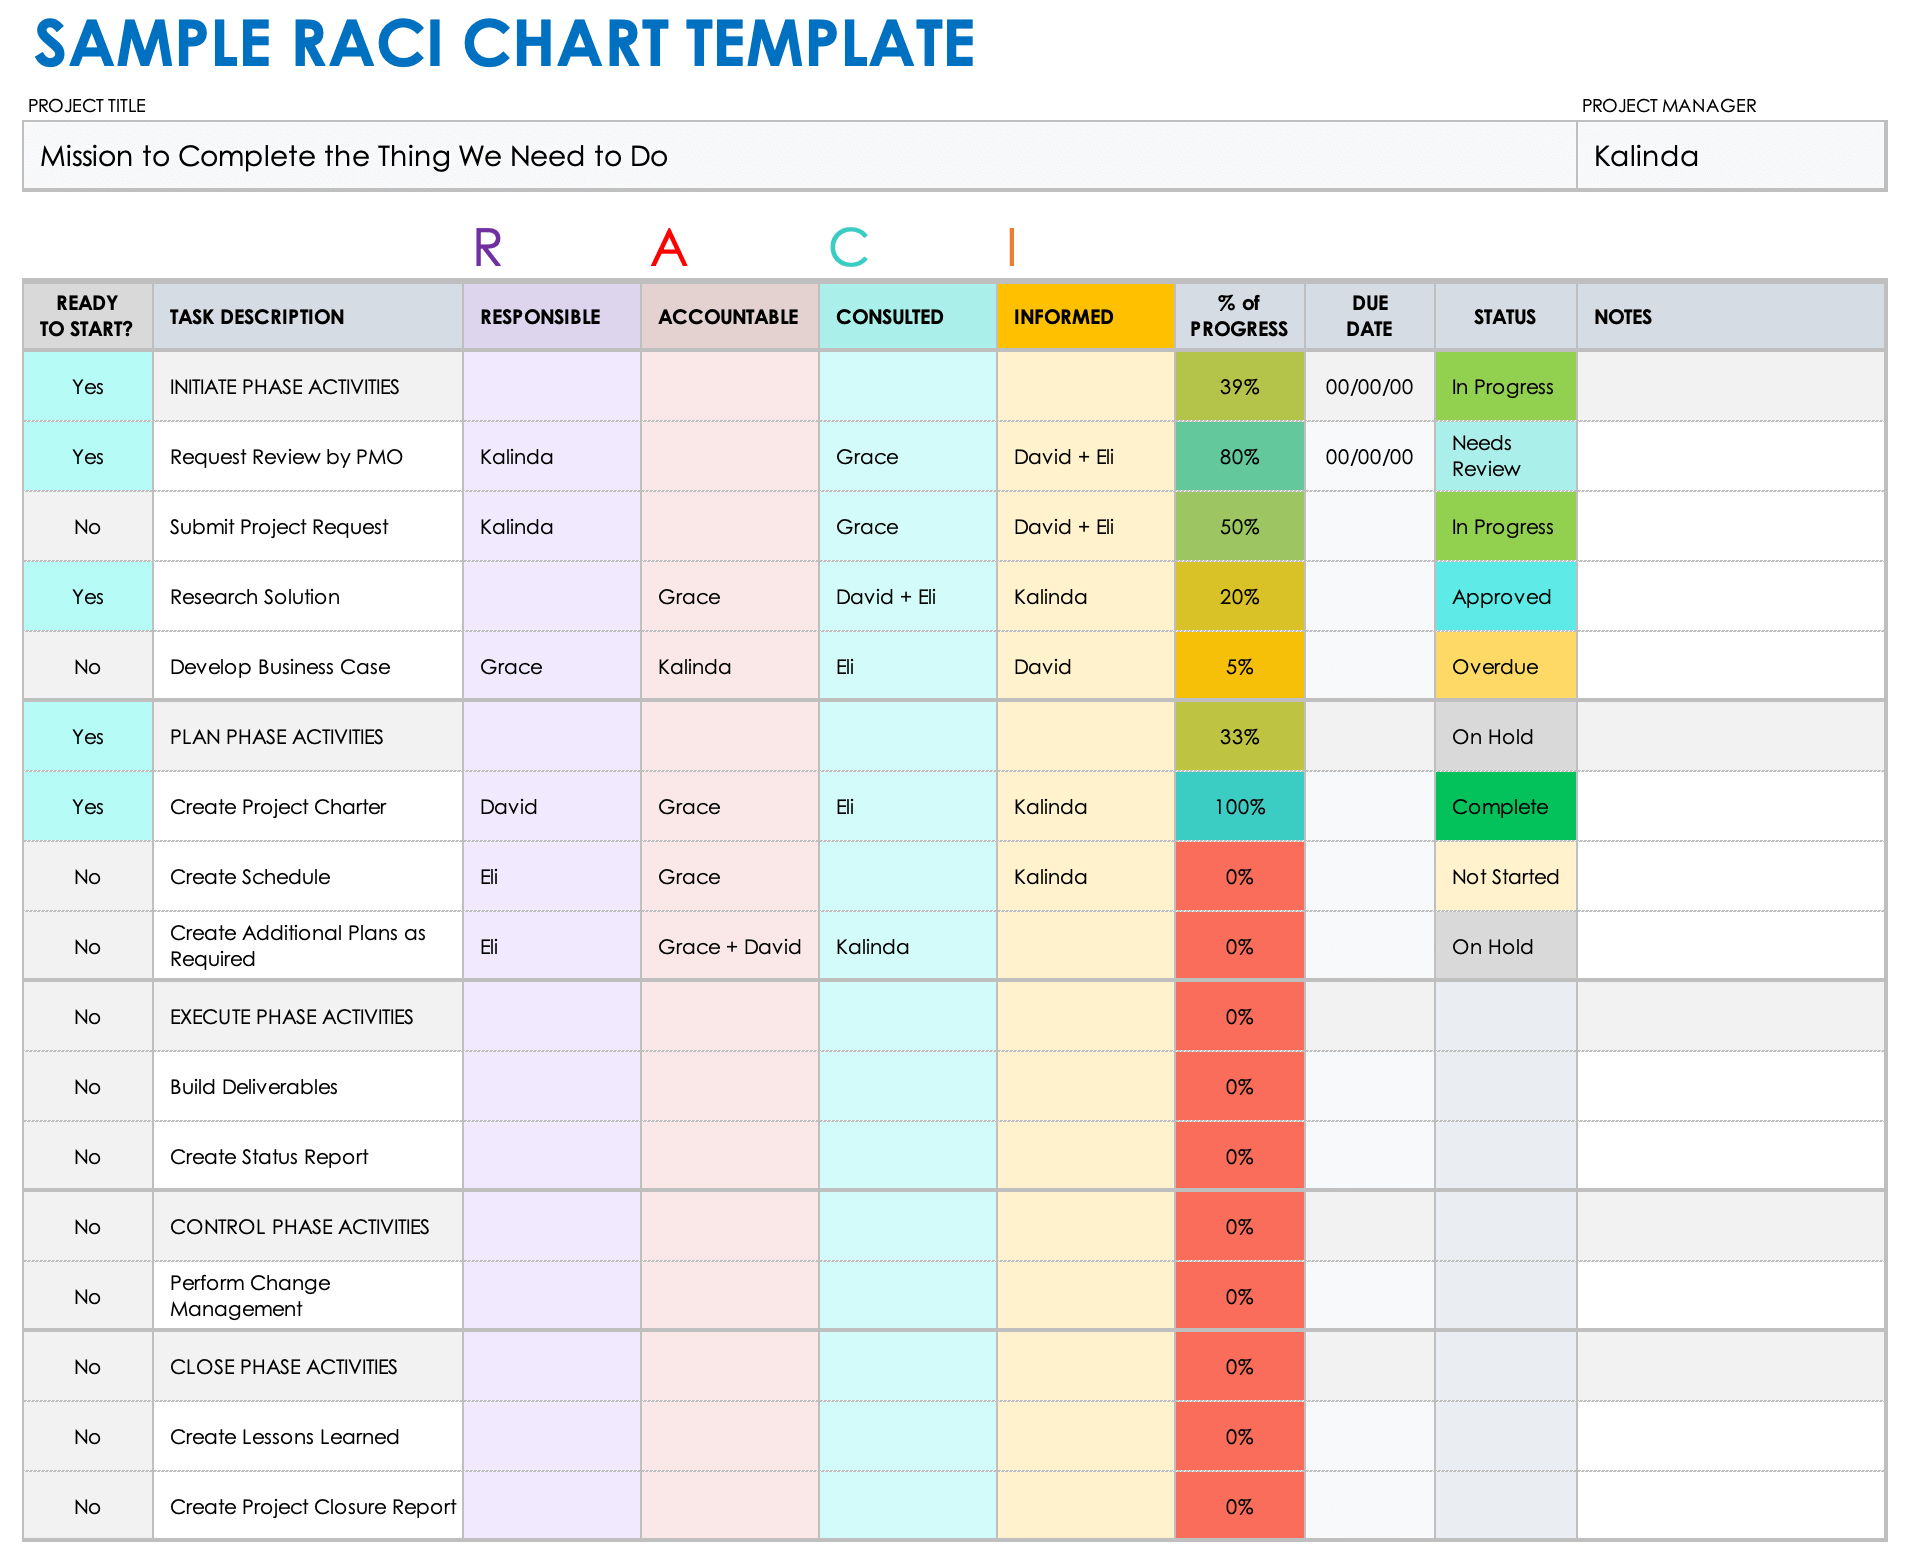 Sample RACI Chart Template